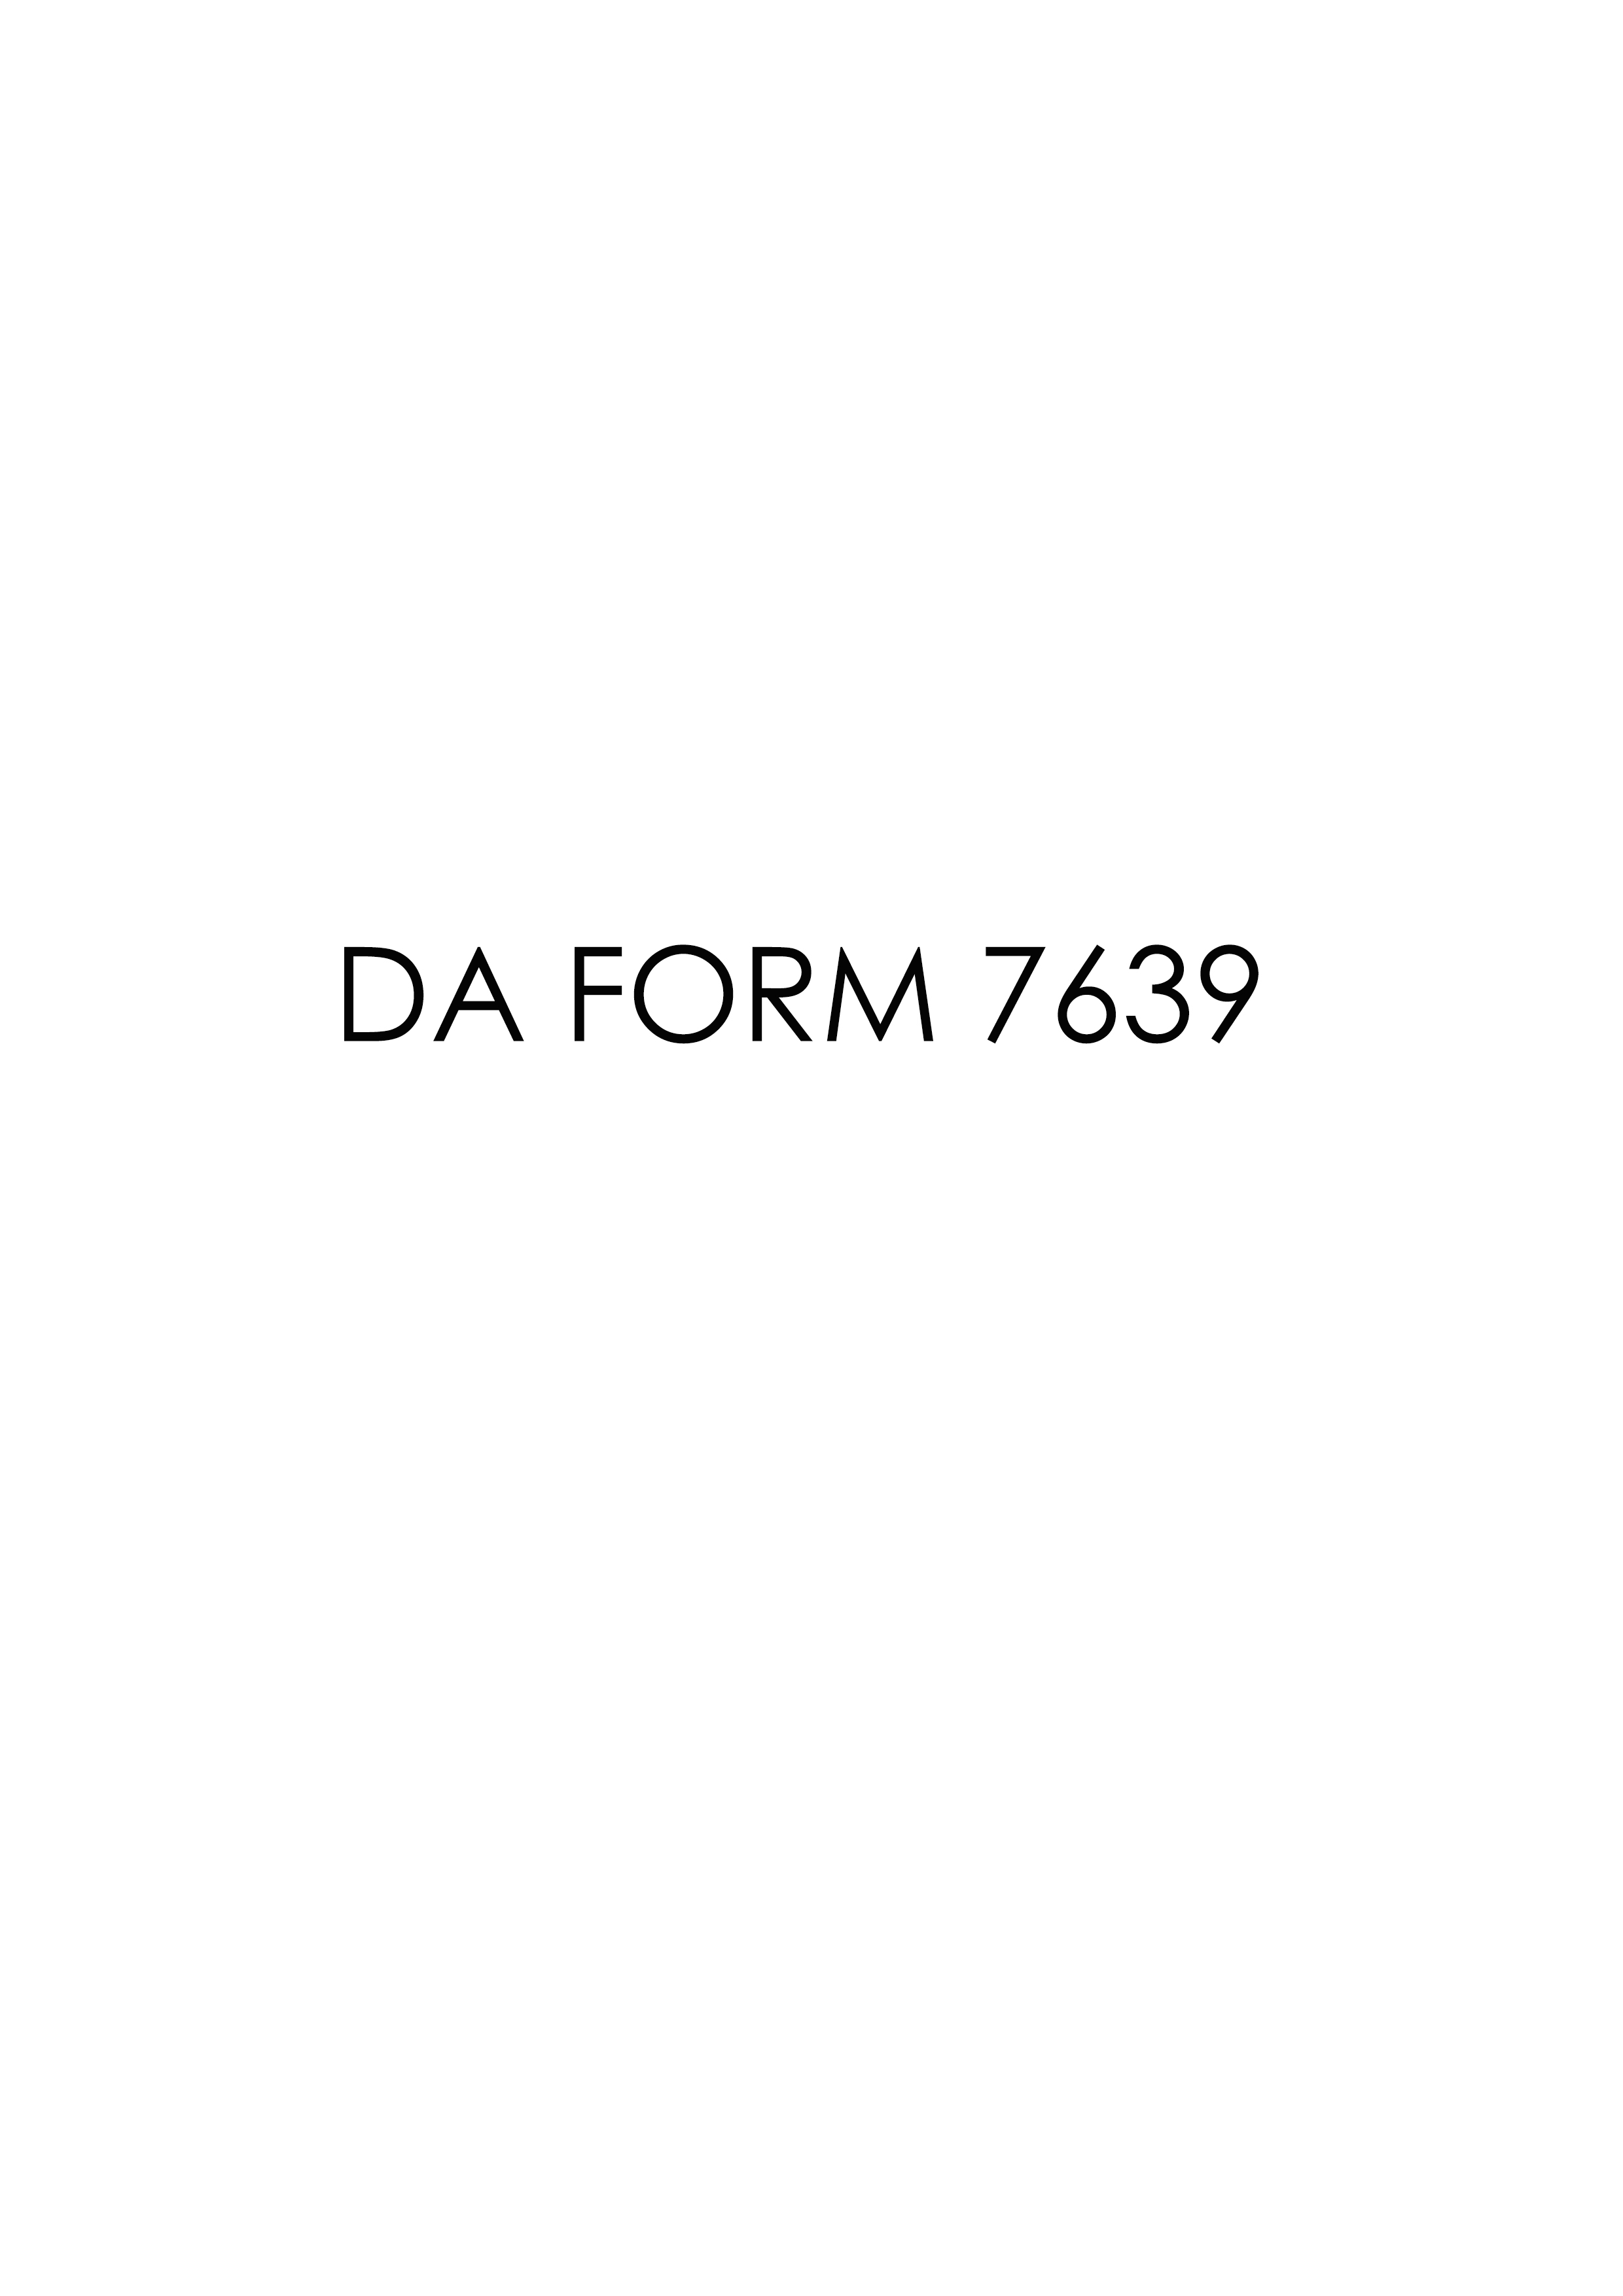 Download da 7639 Form